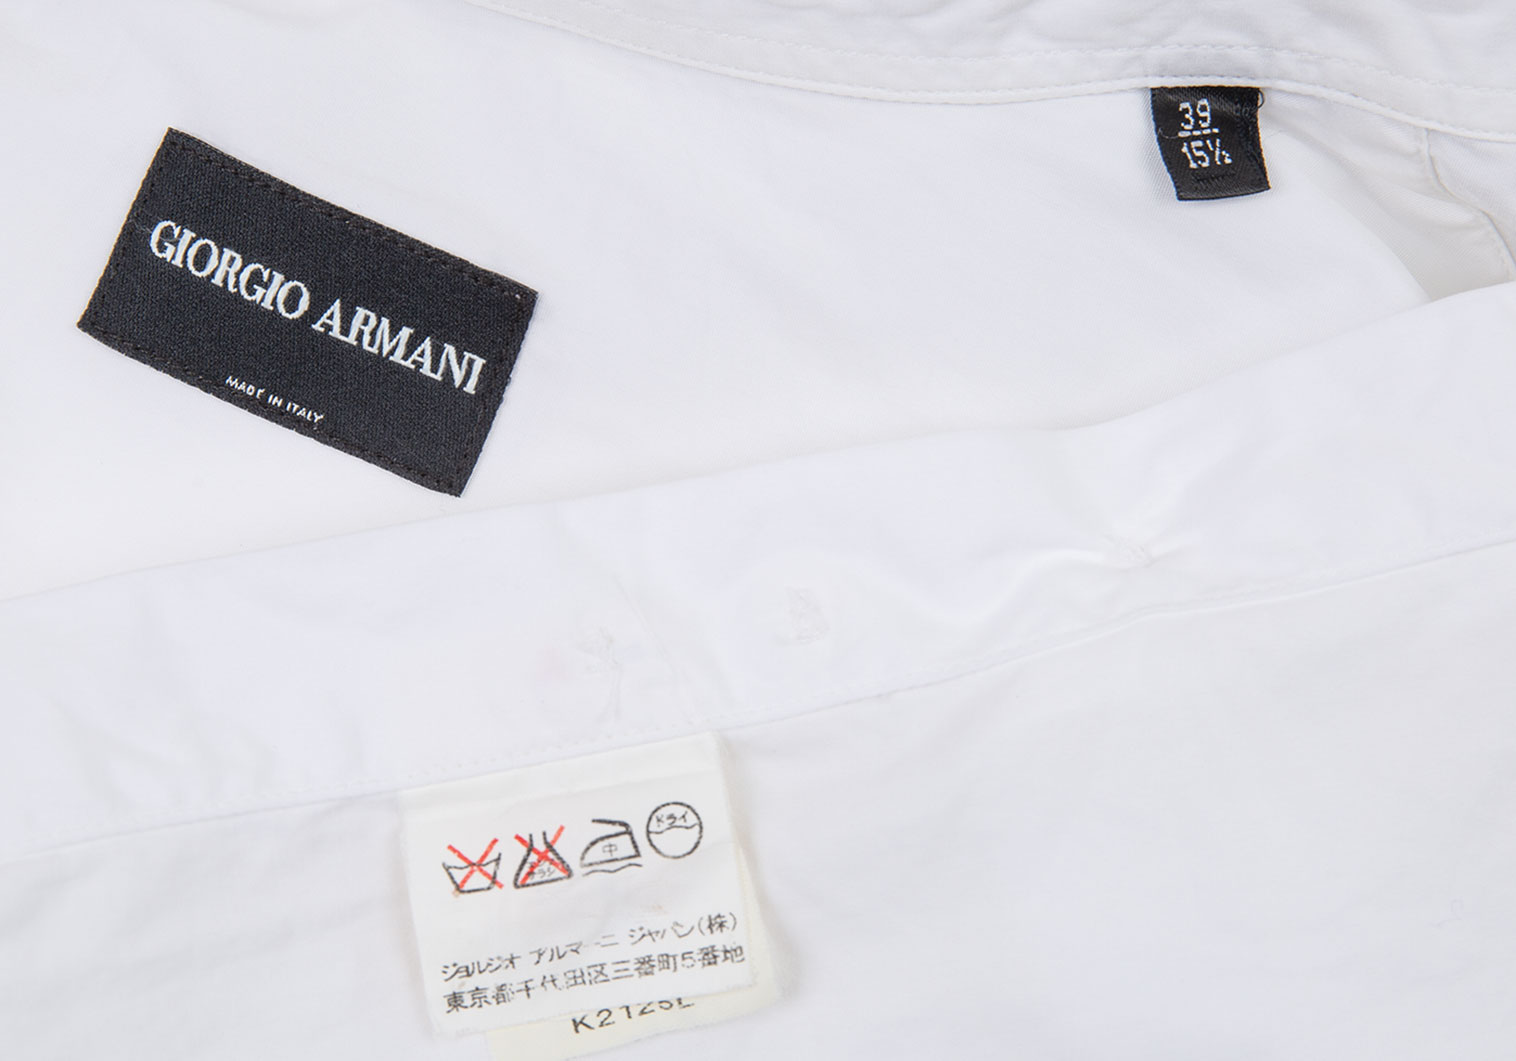 GIORGIO ARMANI Tシャツ・カットソー 50(XL位) 黒